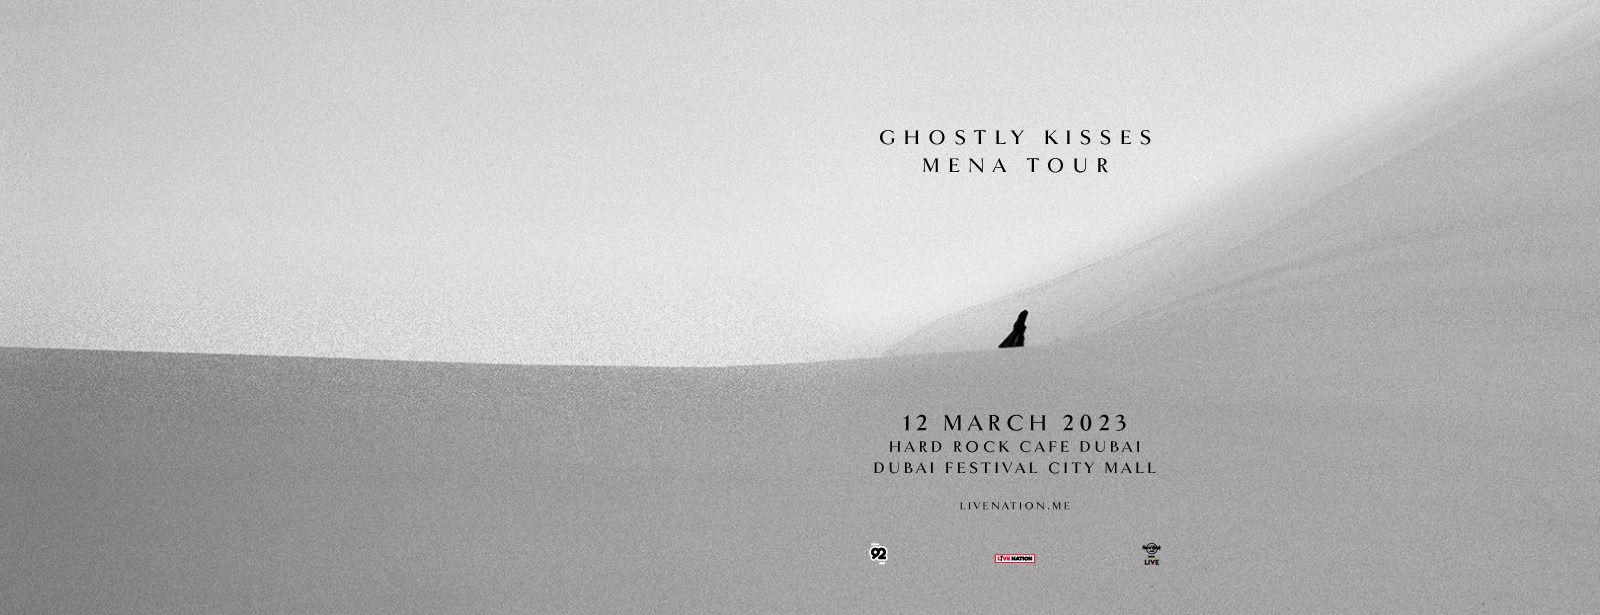 Ghostly Kisses MENA Tour in Dubai - Coming Soon in UAE